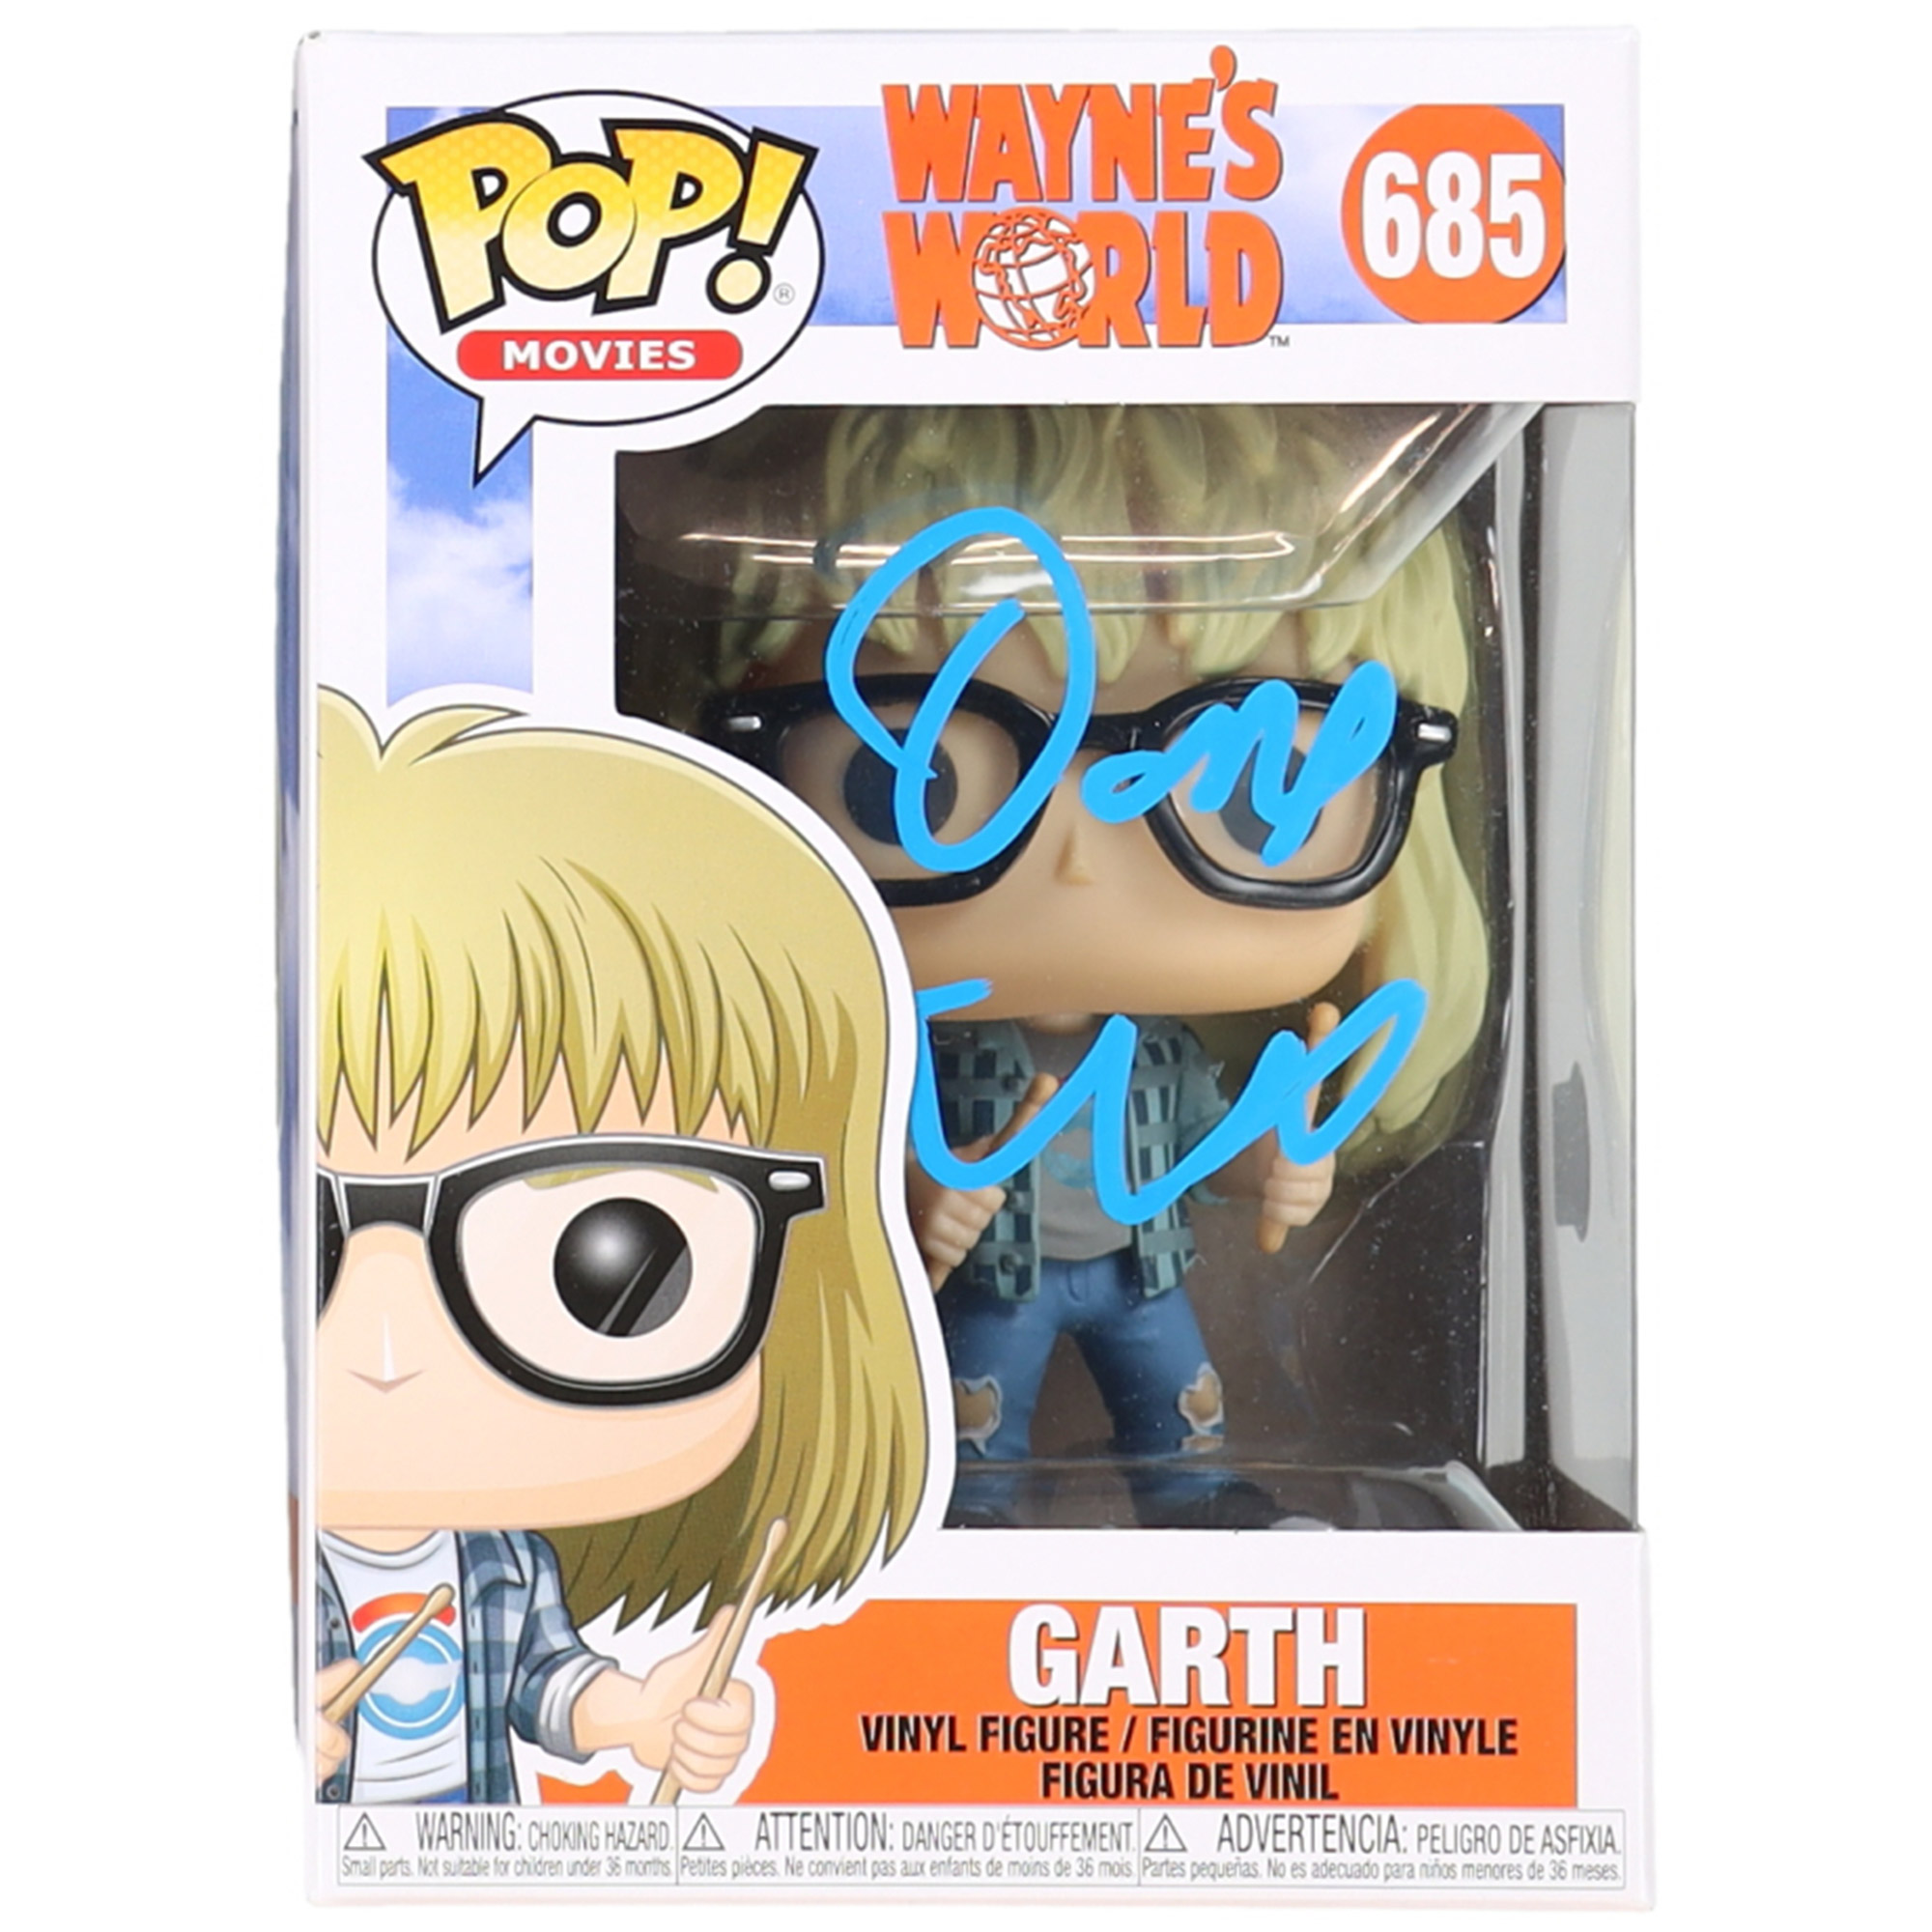 Dana Carvey – “Wayne’s World” Garth #685 Autog...